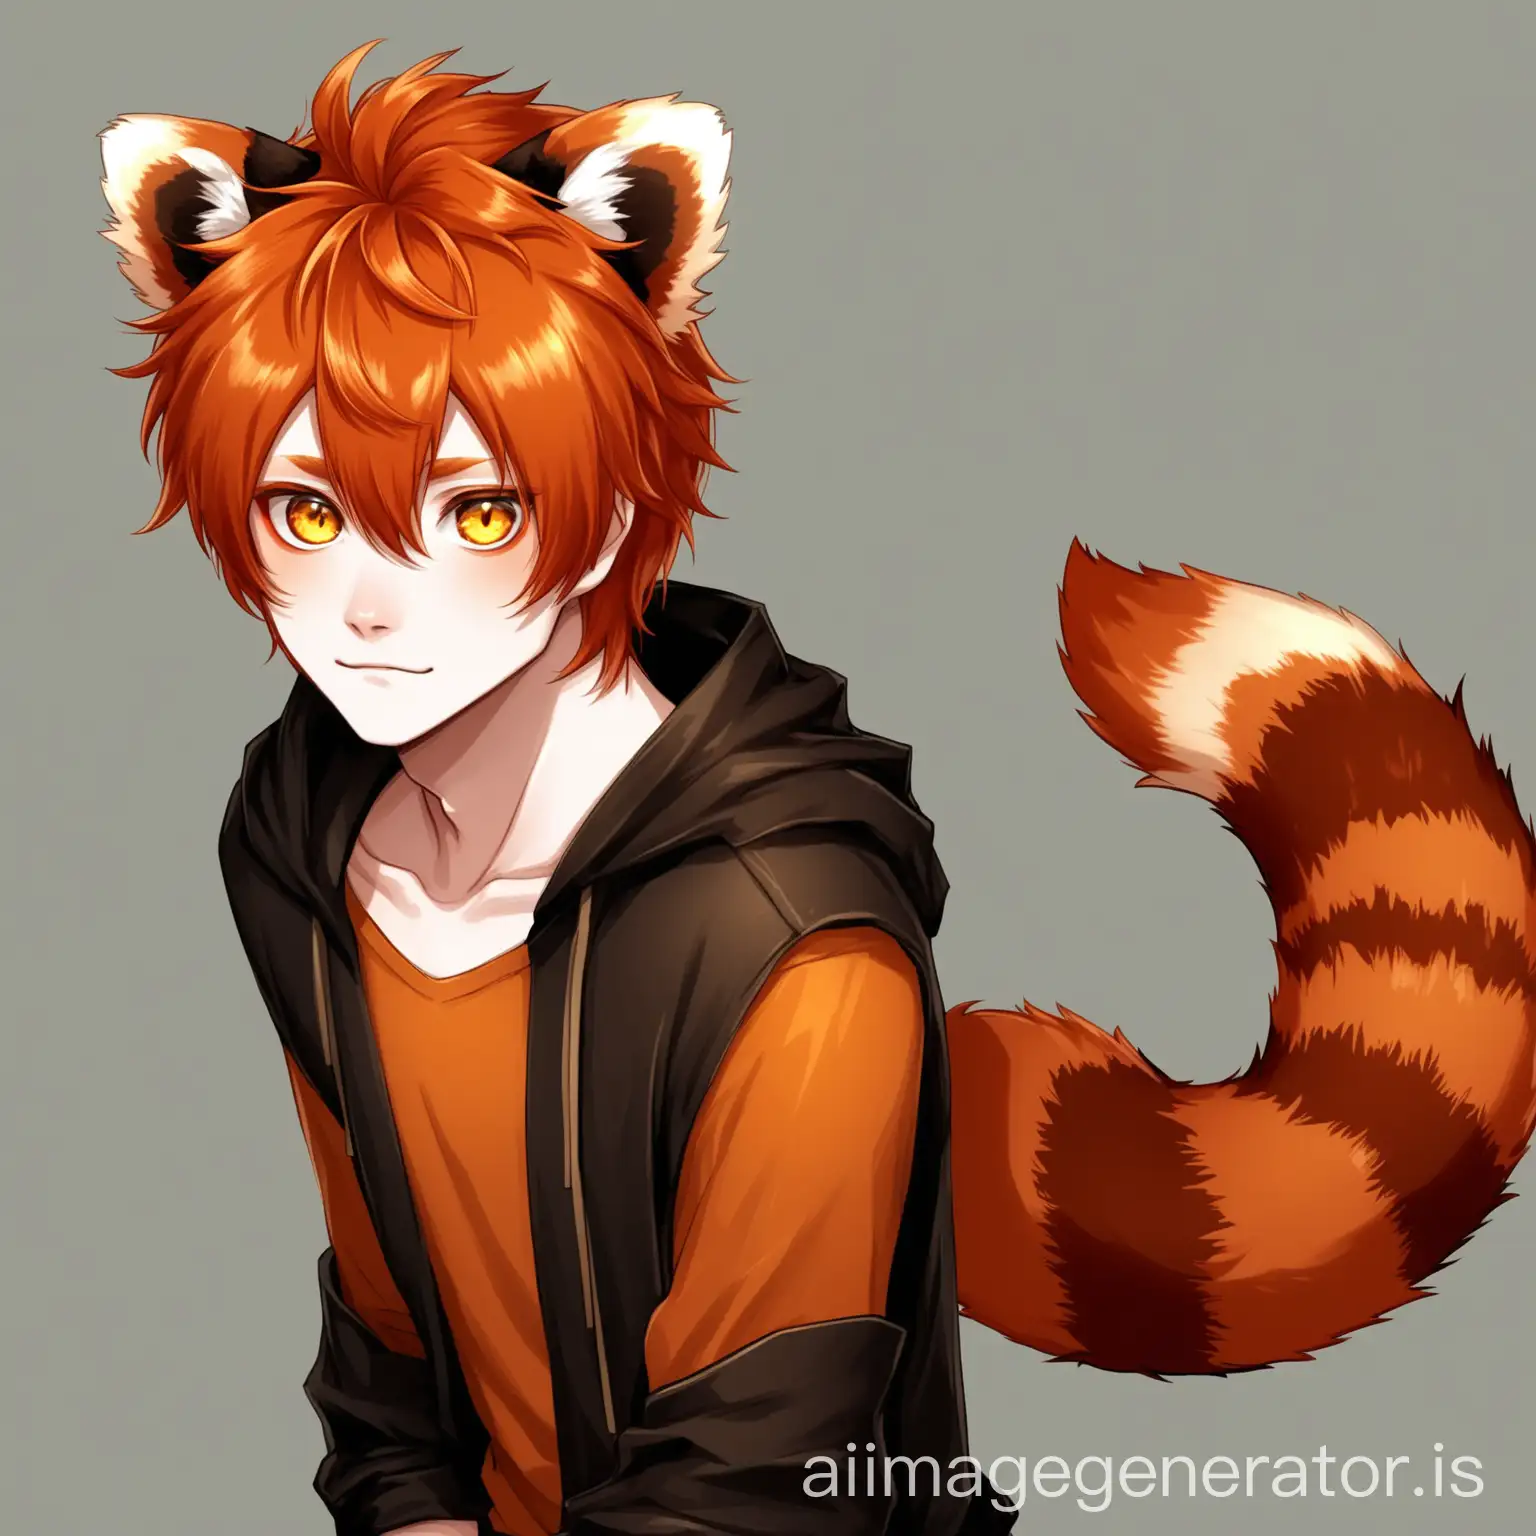 Male, red panda demihuman, soft red panda ears and tail, orange hair, stunning yellow eyes.